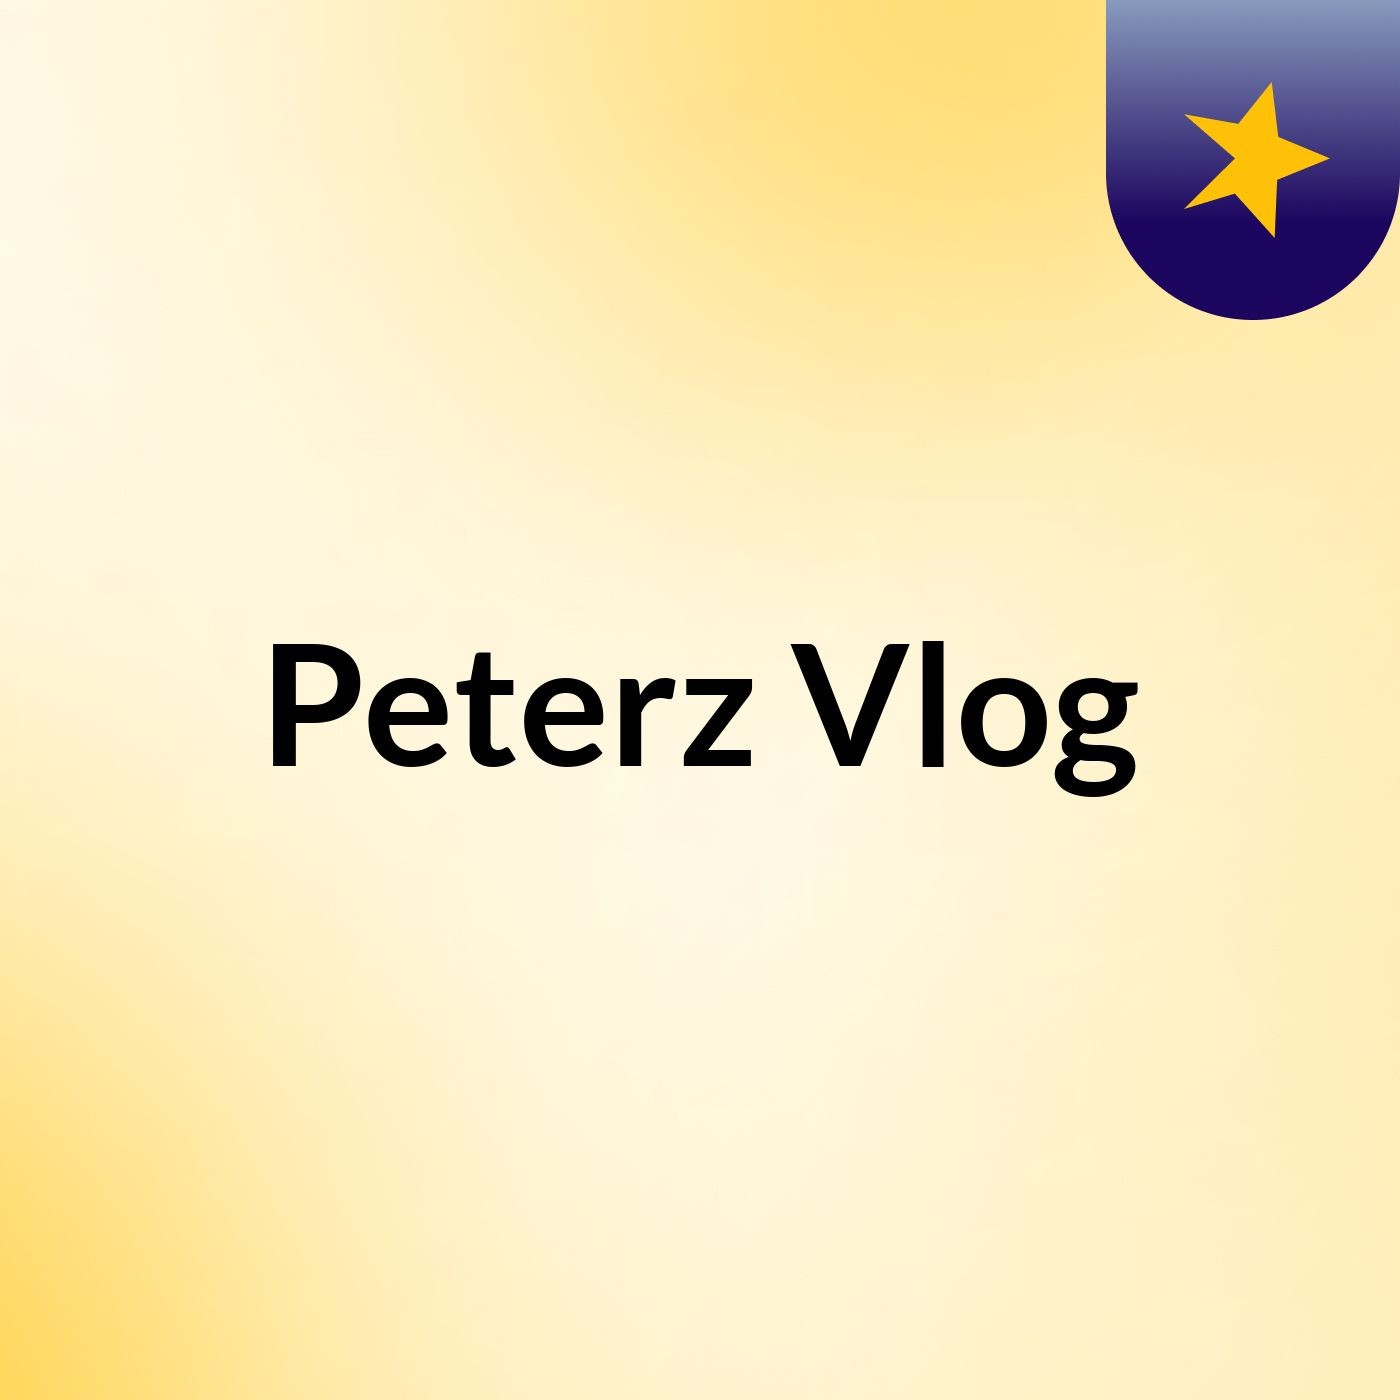 Episode 2 - Peterz Vlog